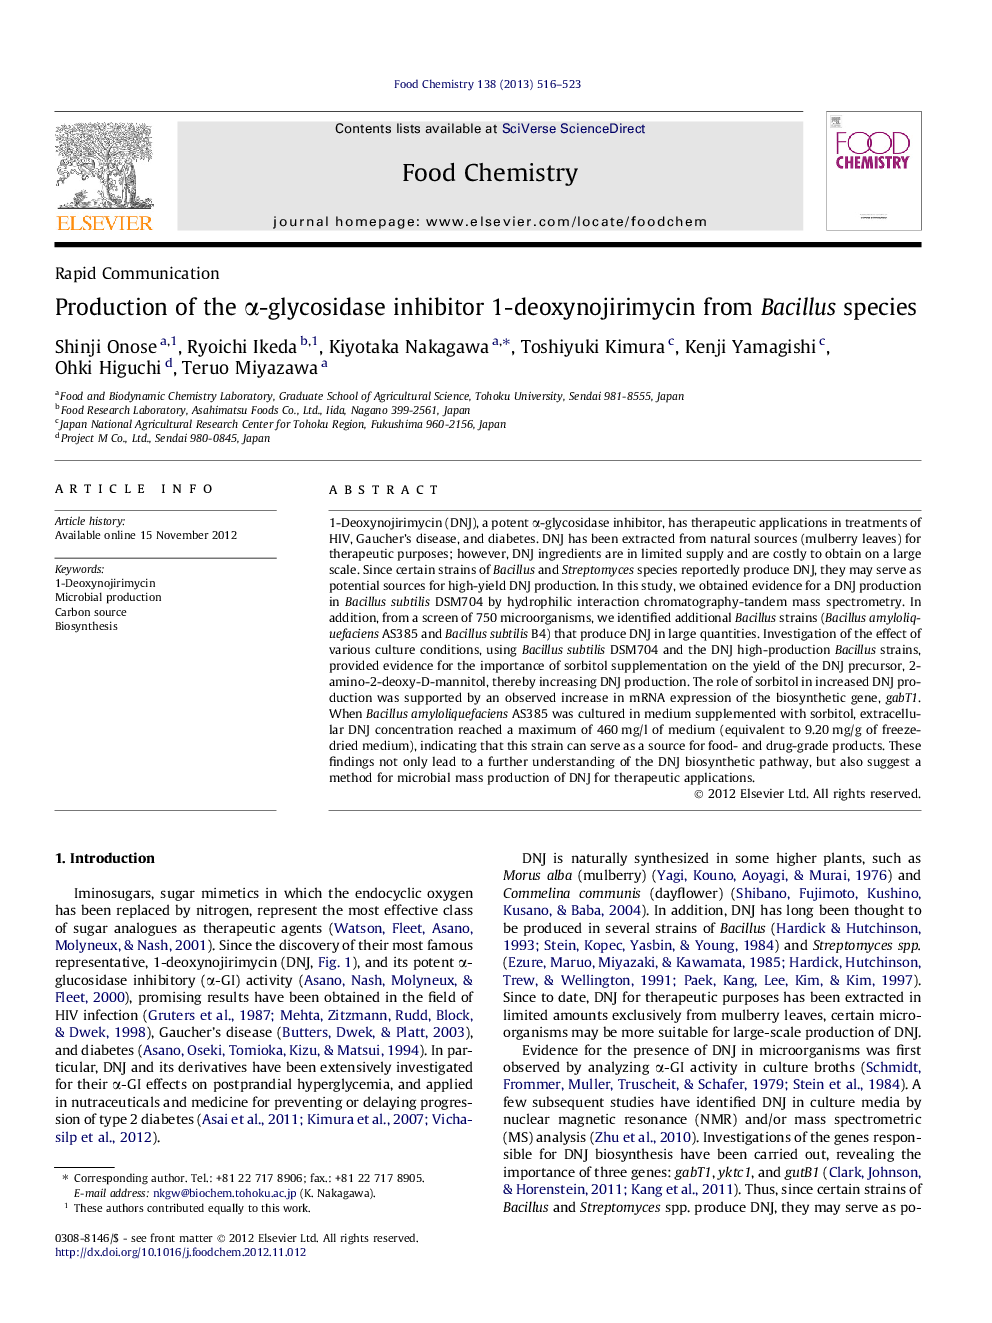 Production of the Î±-glycosidase inhibitor 1-deoxynojirimycin from Bacillus species